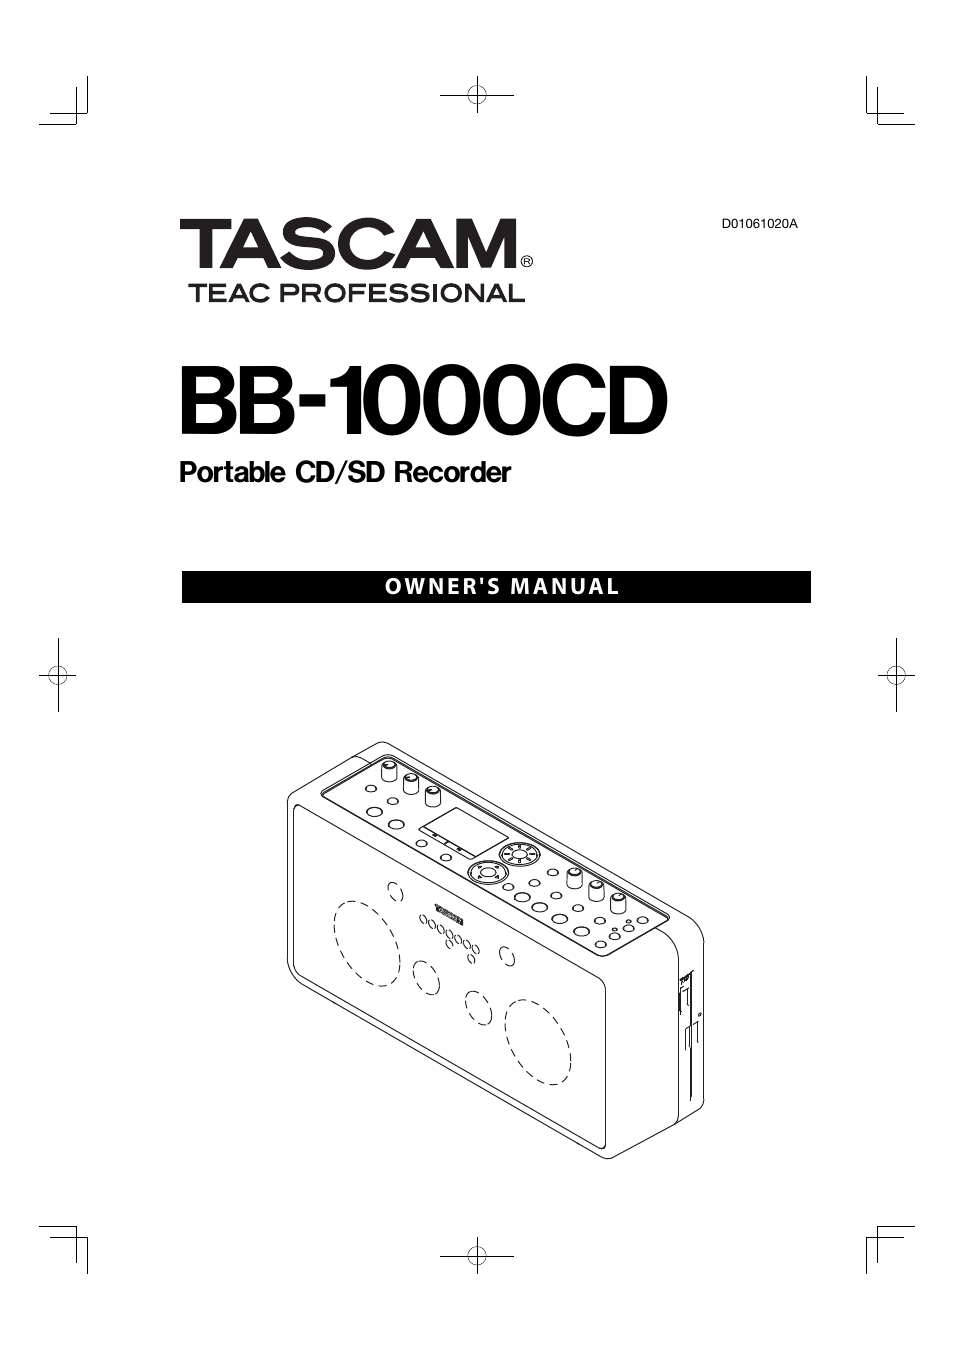 BB-1000CD